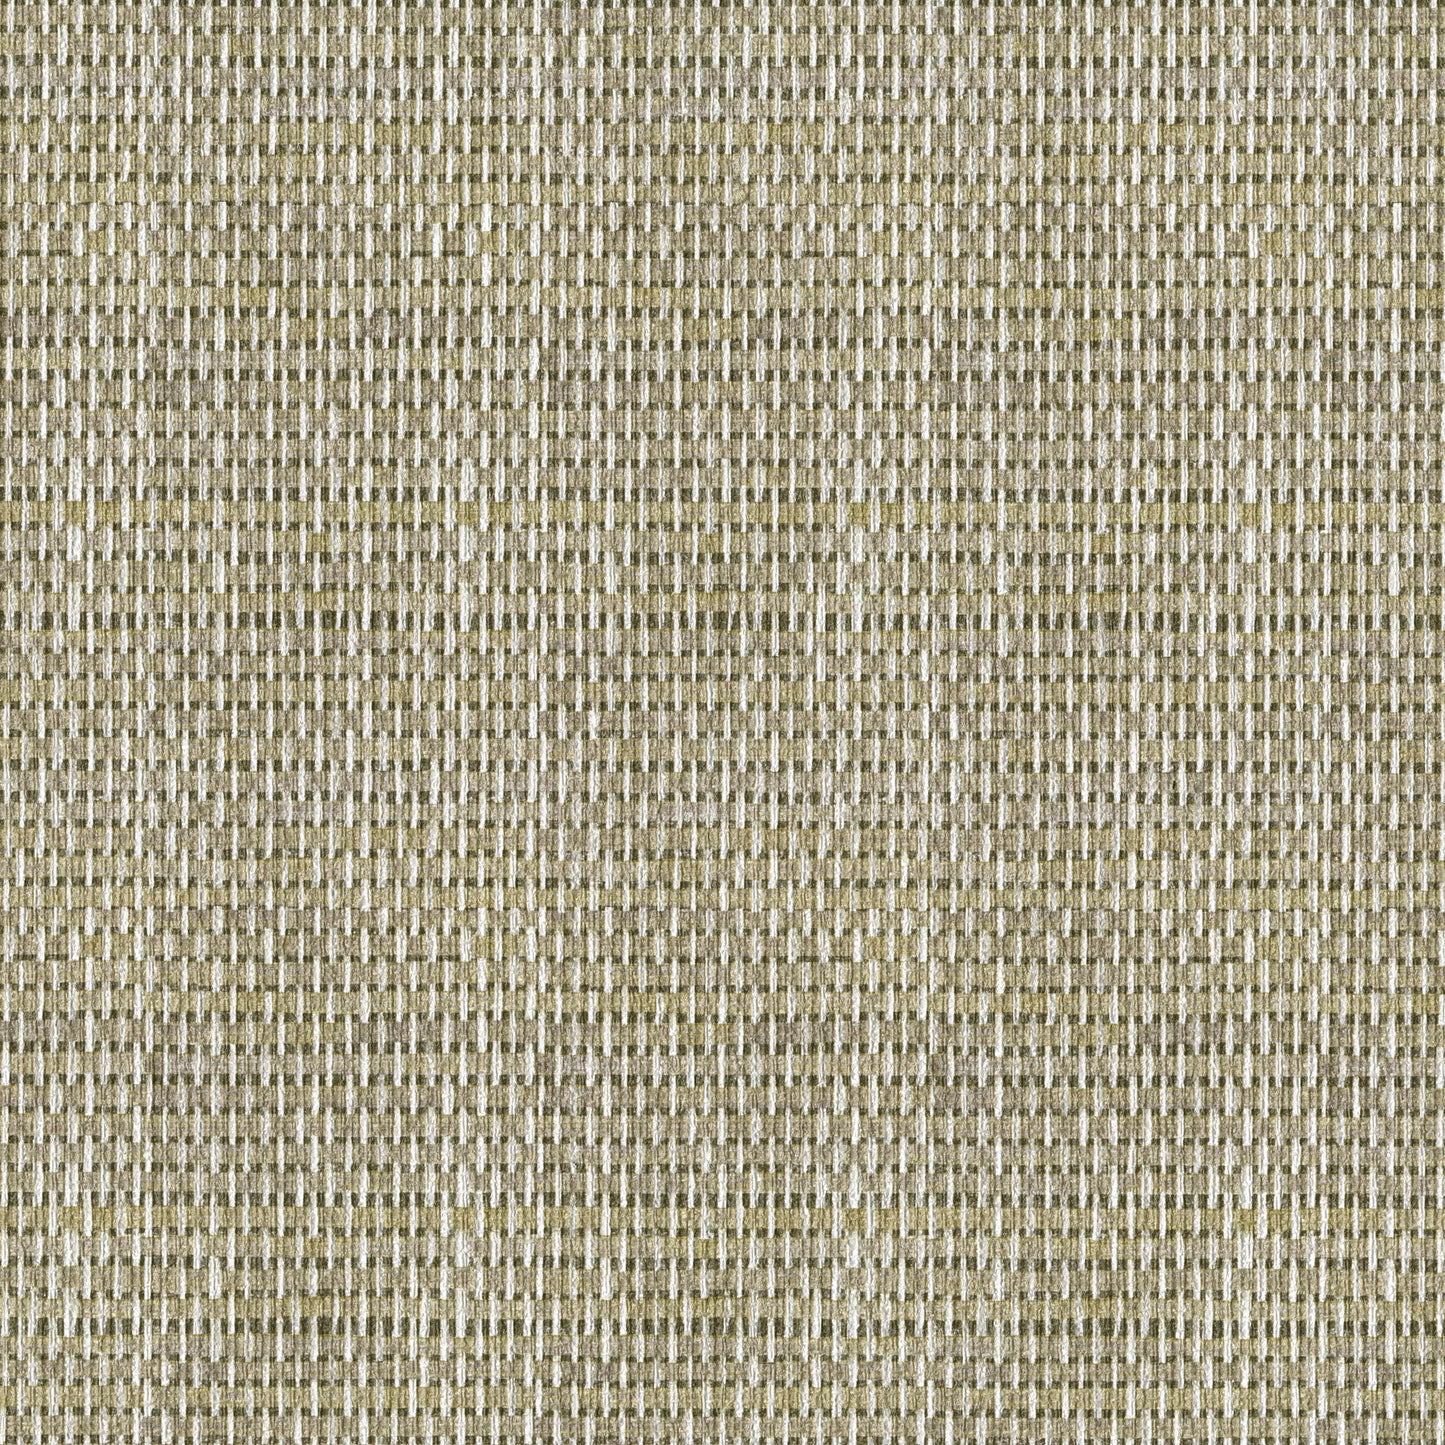 Purchase JF Wallpaper Pattern# 8166 74W9071 Red Faux Grasscloth Wallpaper